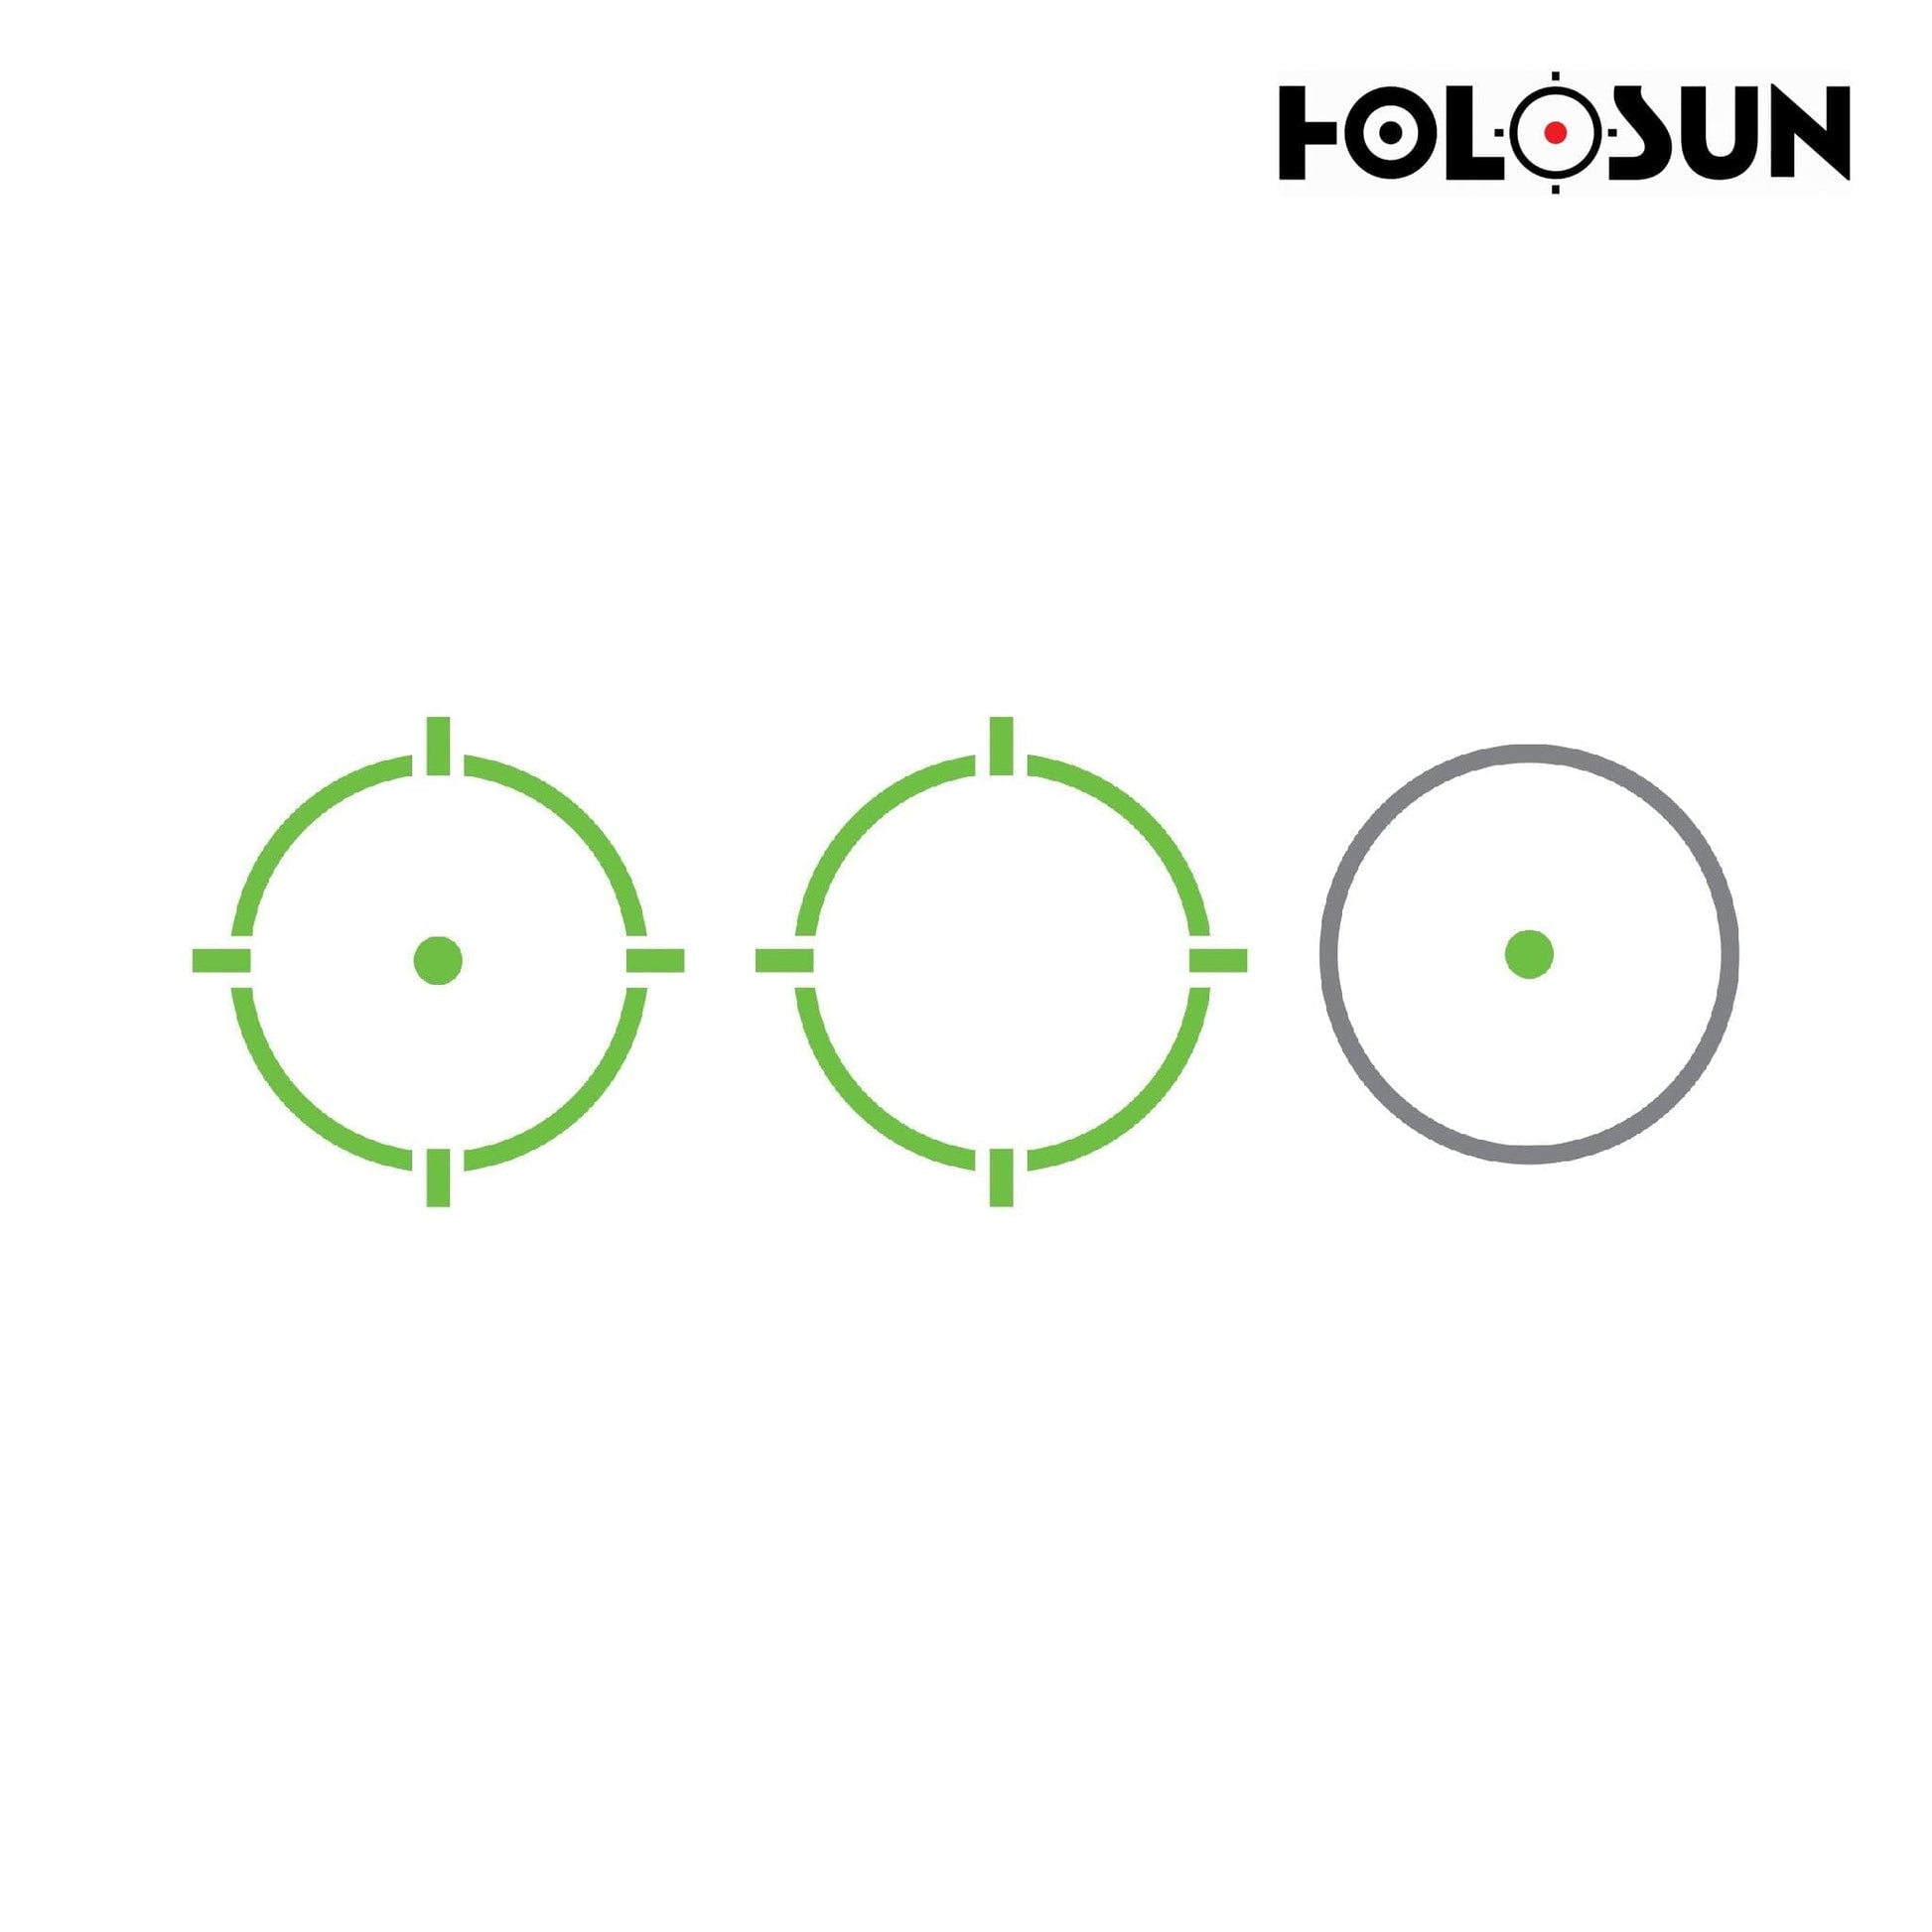 Holosun HE510C-GR-FDE Elite Reflex Green Dot Sight Green Dot Sight Holosun Technologies 